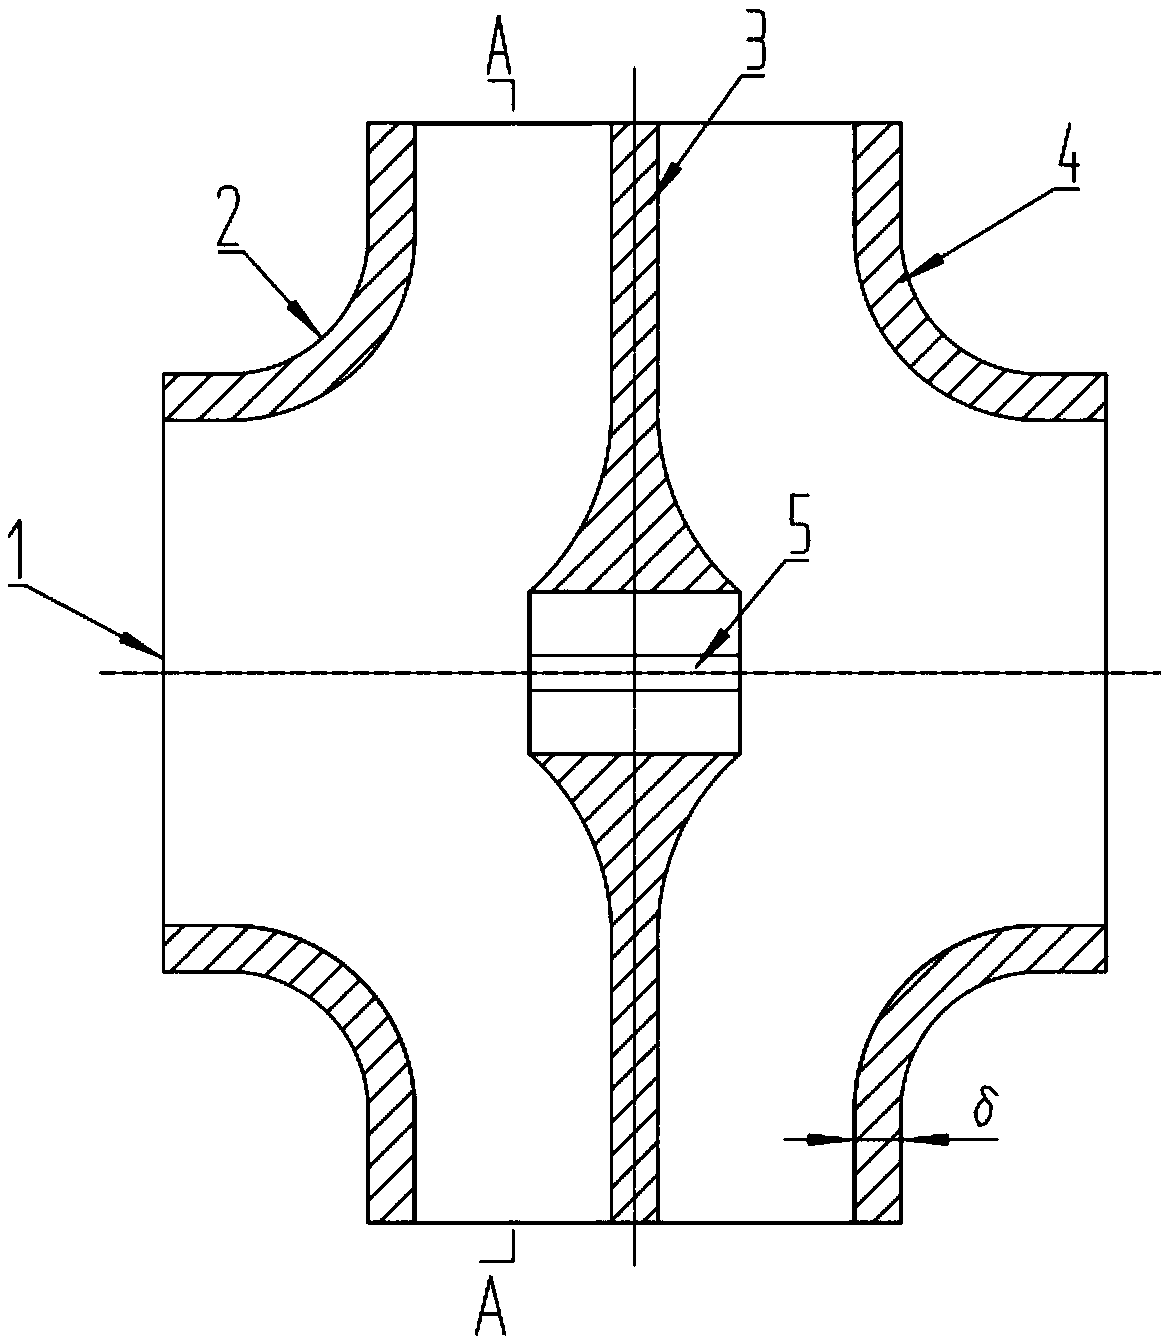 A type of elliptical double-suction four-channel pump impeller